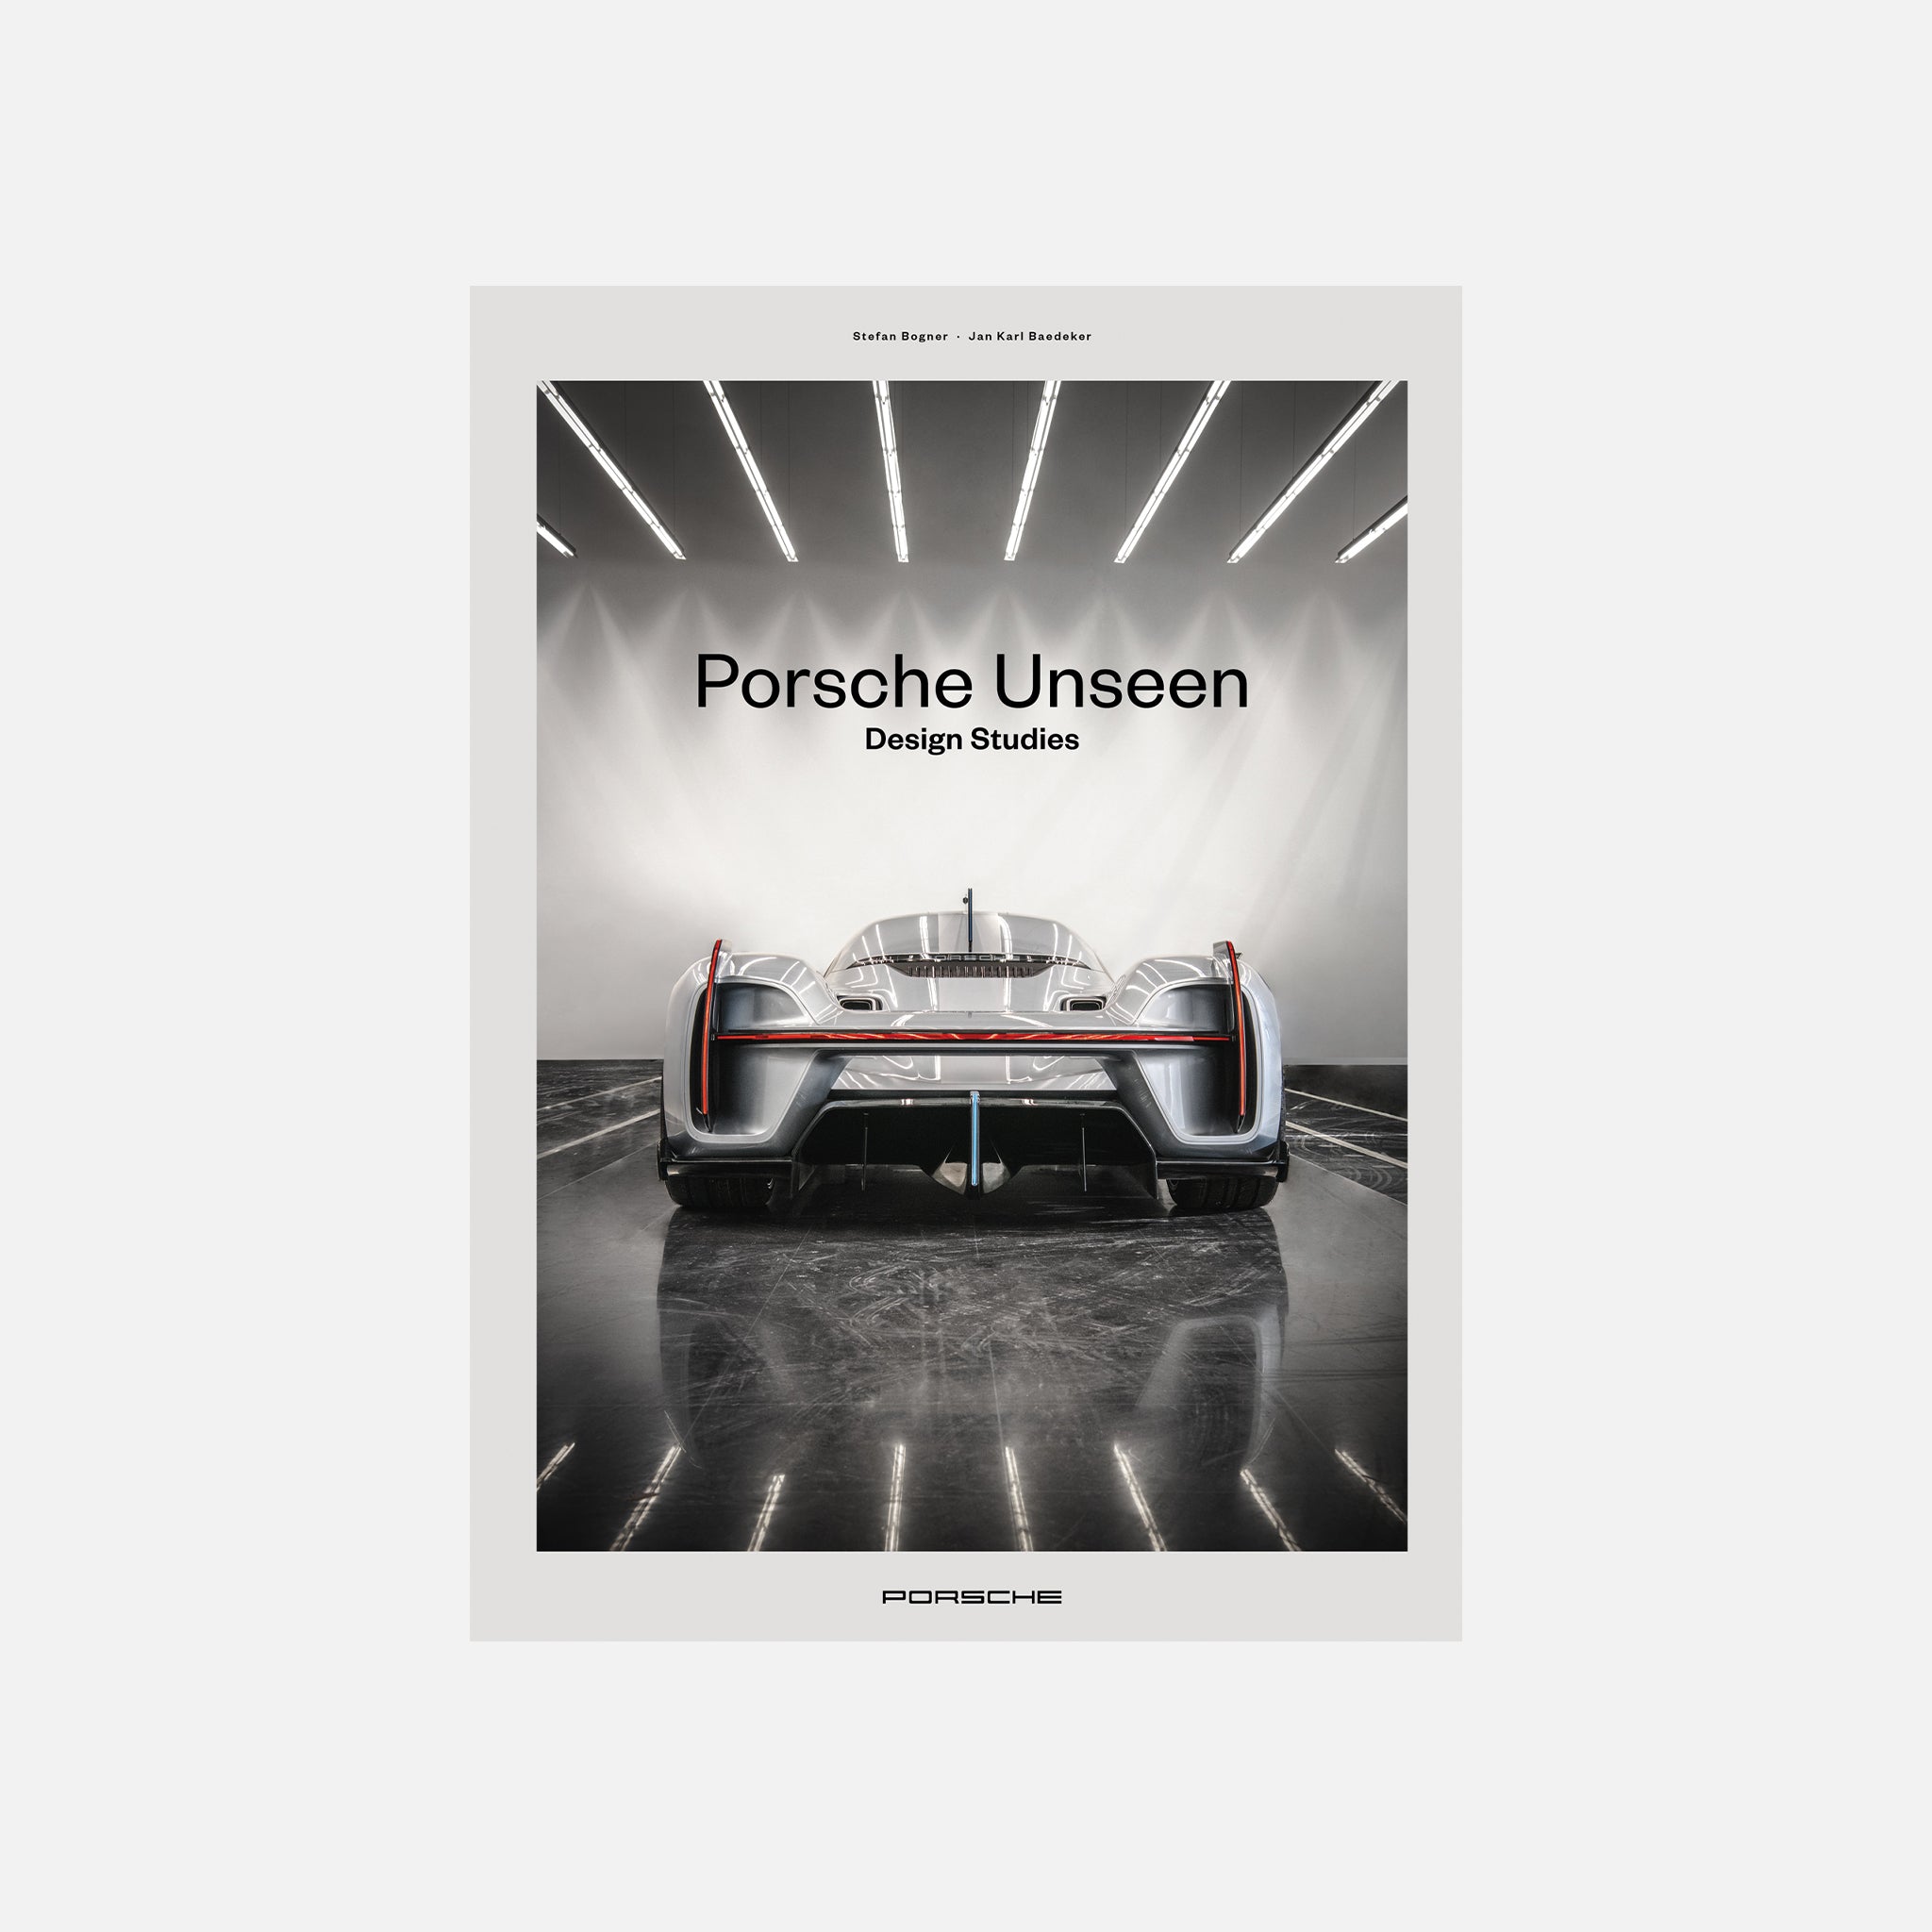 Image of Porsche Unseen